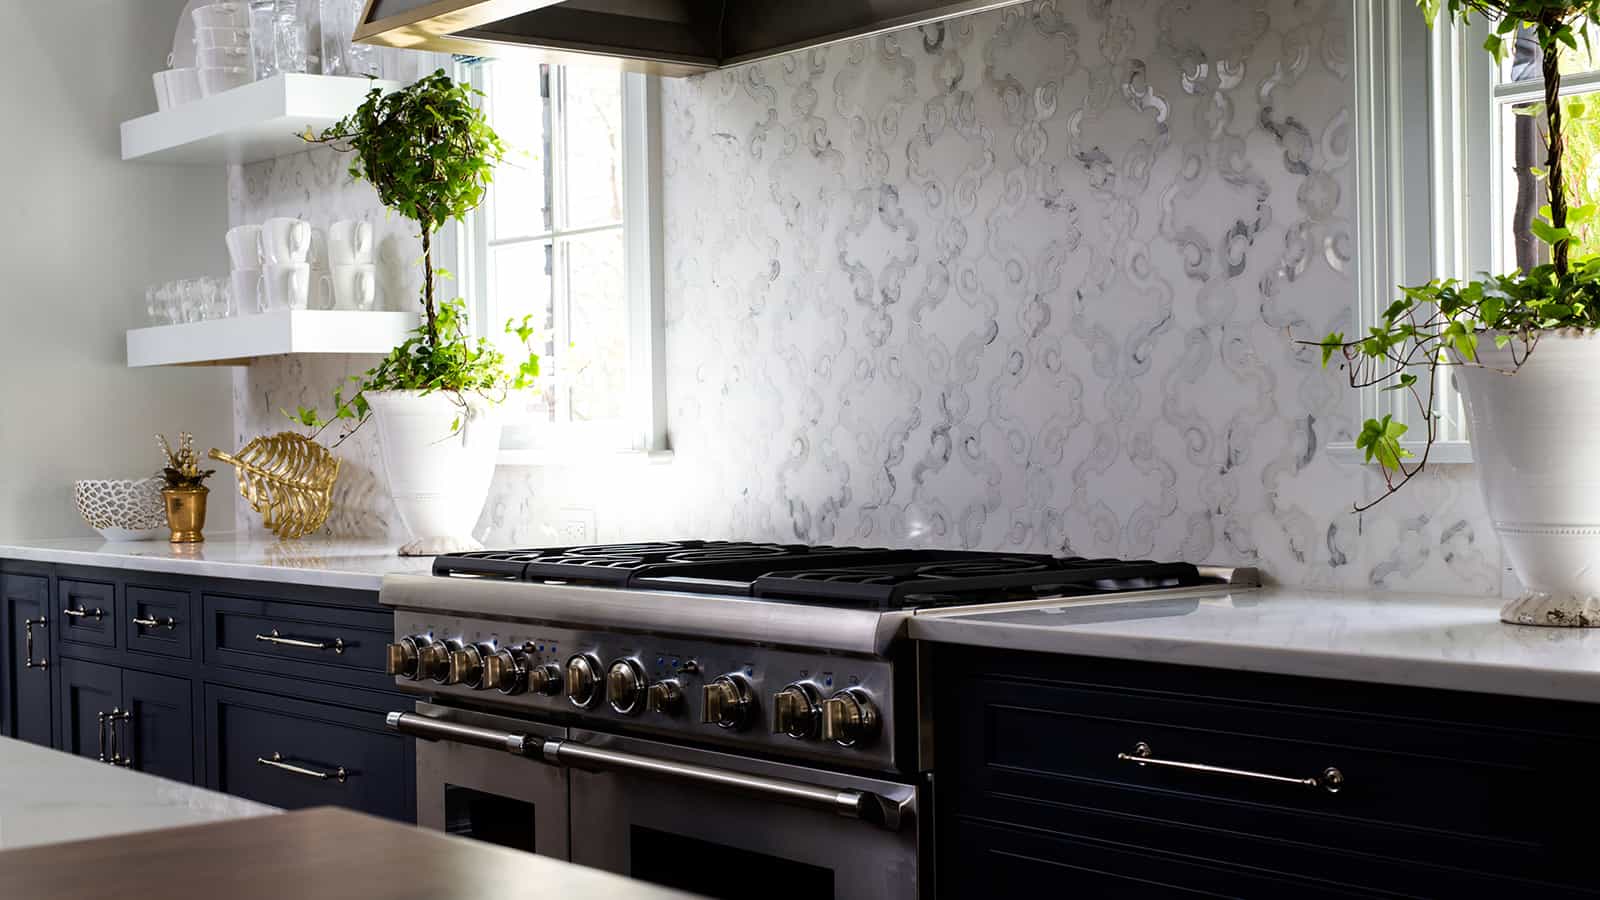 kitchen tiles, beautiful kitchens, stone kitchen